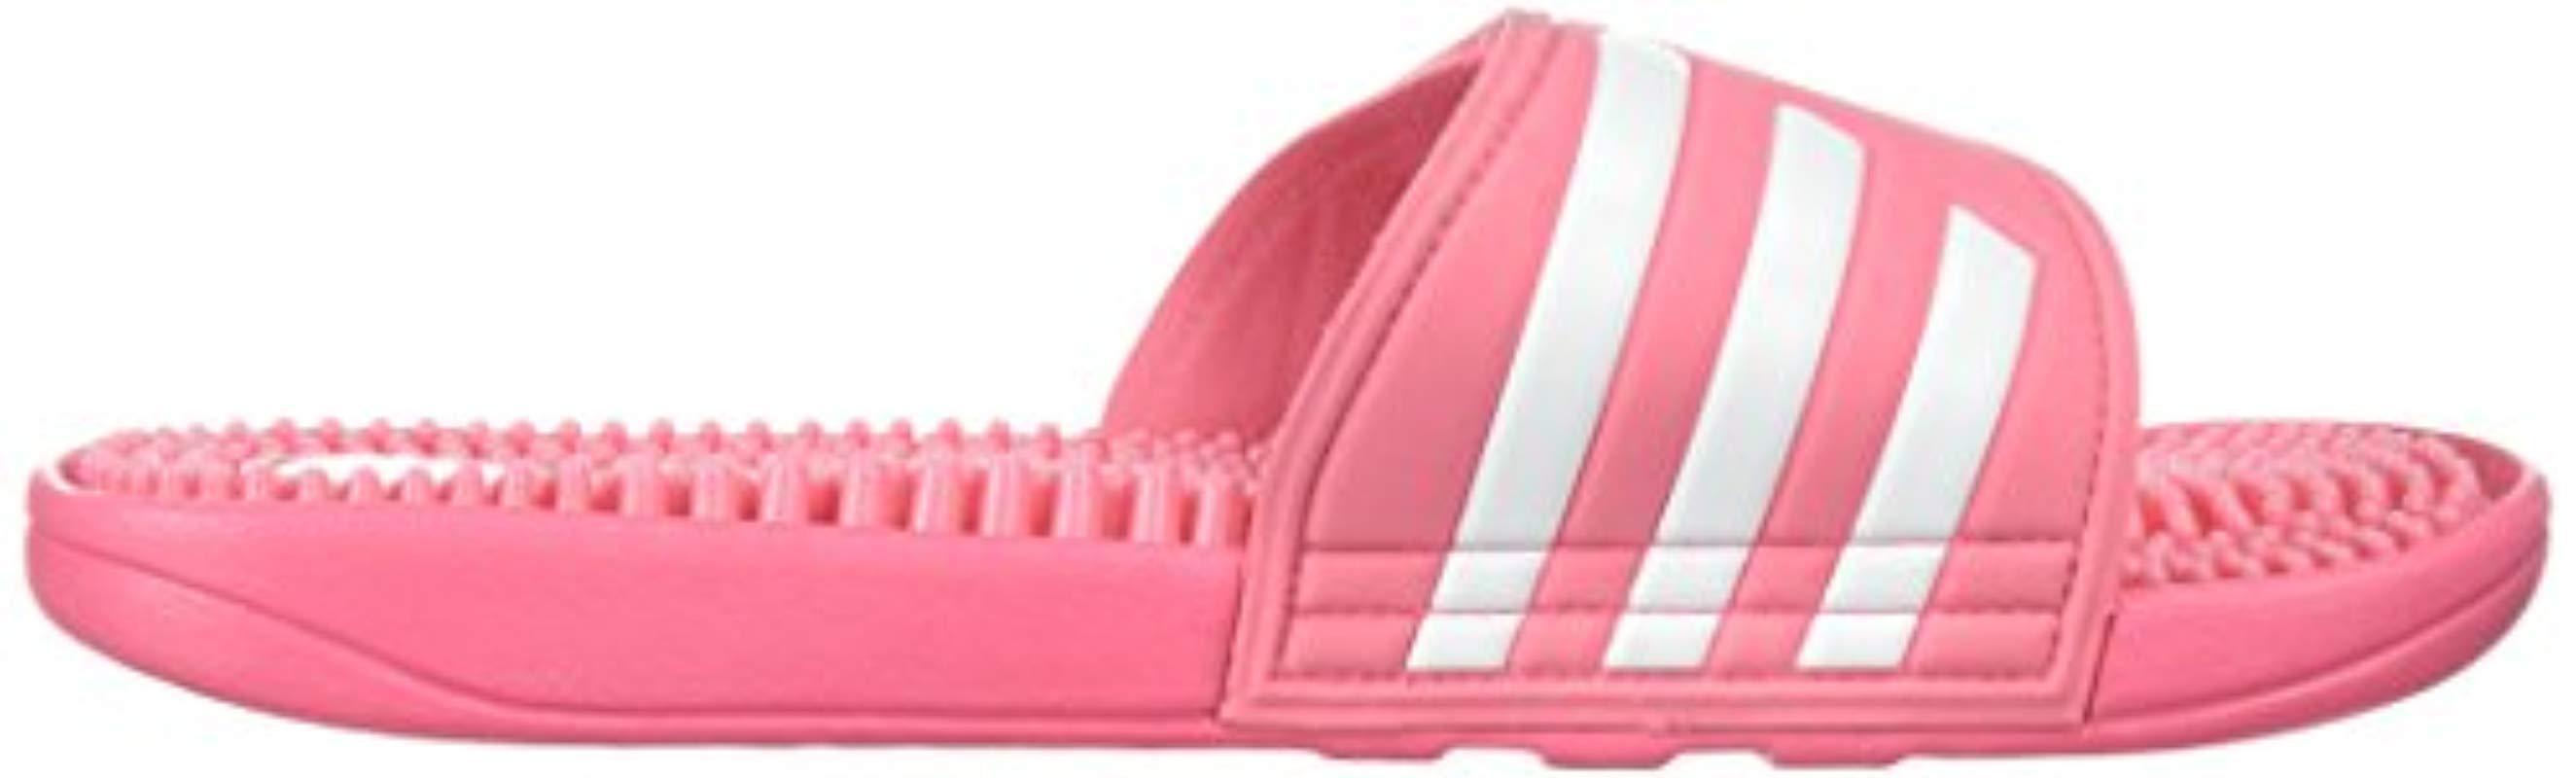 adidas adissage rosa